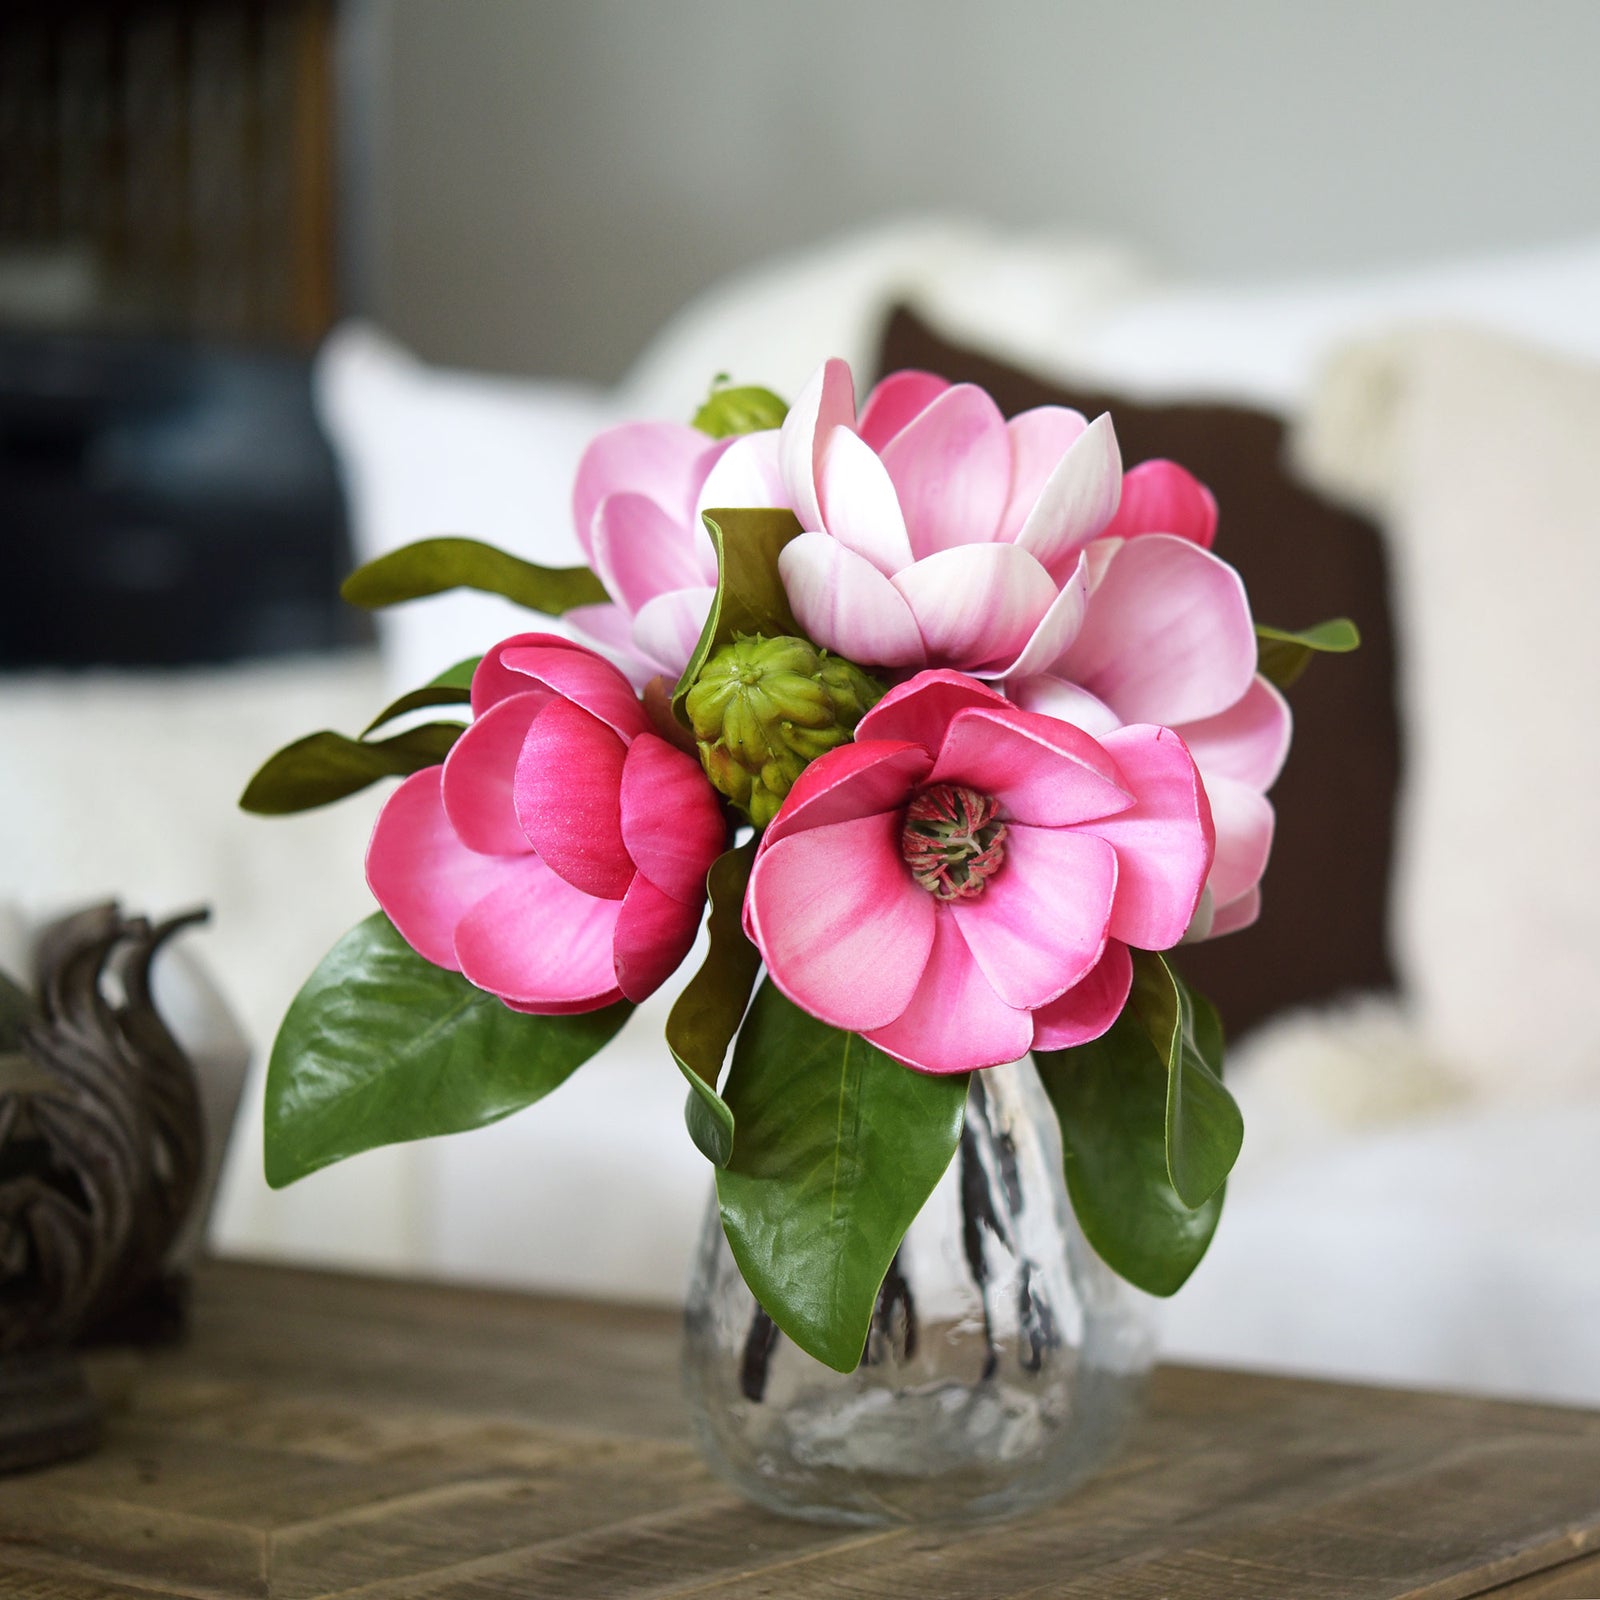 FiveSeasonStuff Magenta Passion Pink Magnolia Artificial Flowers Arrangement with 4 Stems, Wedding Bridesmaids Bouquet Home Decor